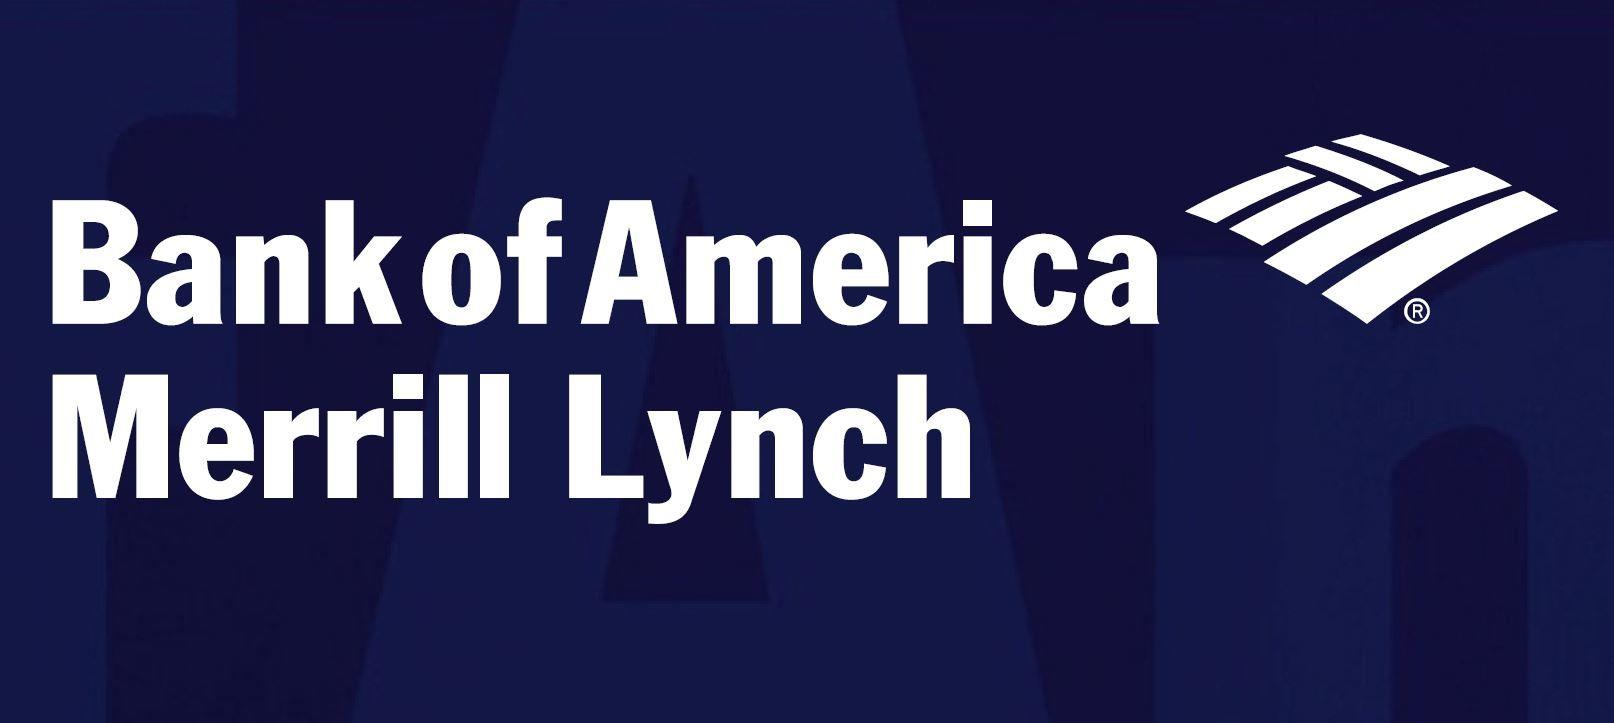 Bank of America Merrill Lynch Logo - Avascent's John Niehaus at the BofA - Merrill Lynch 2014 Defense ...